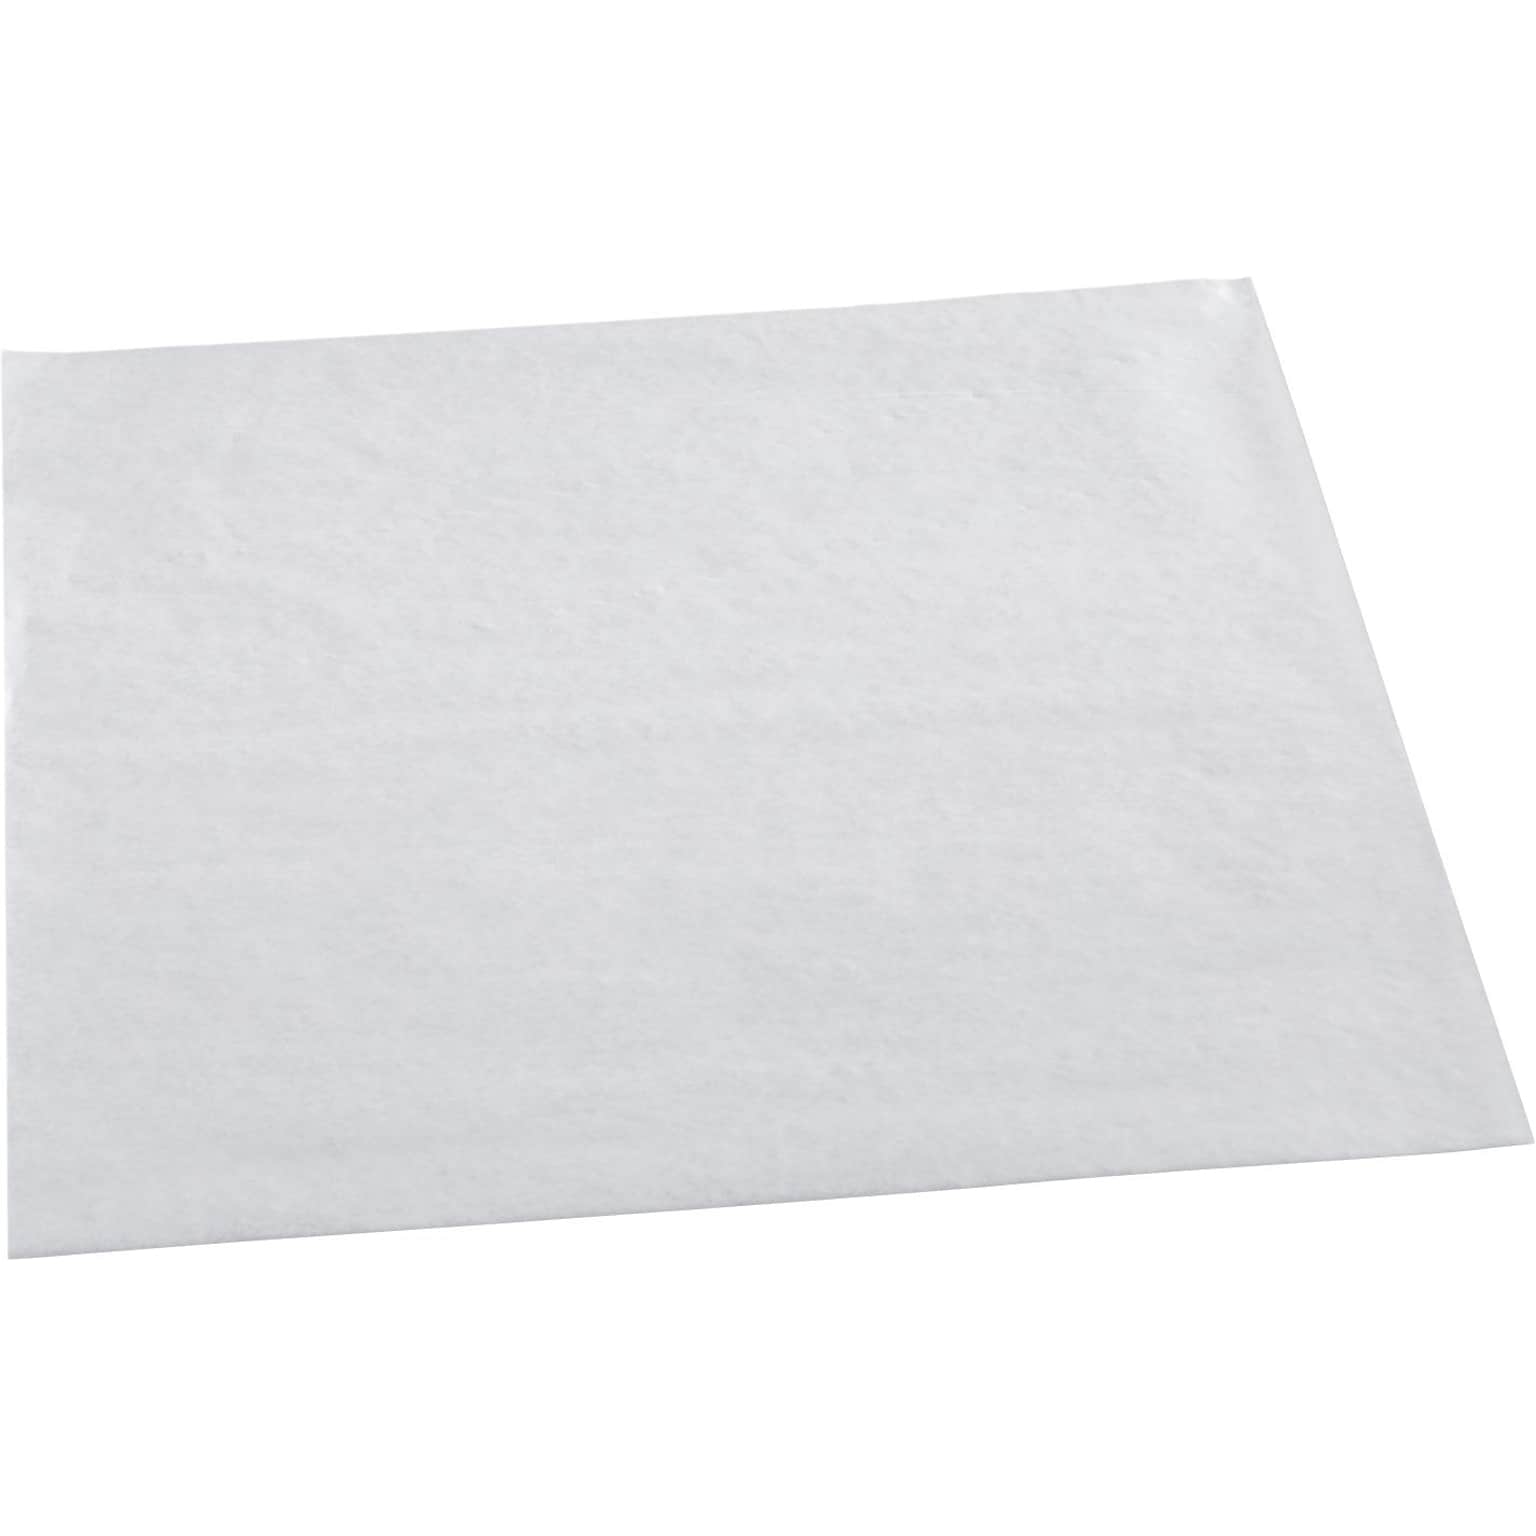 Marcal Deli Wrap Dry Waxed Paper Flat Sheet, 15 x 15, White, 1000/Pack, 3 Packs/Carton (MCD8223)